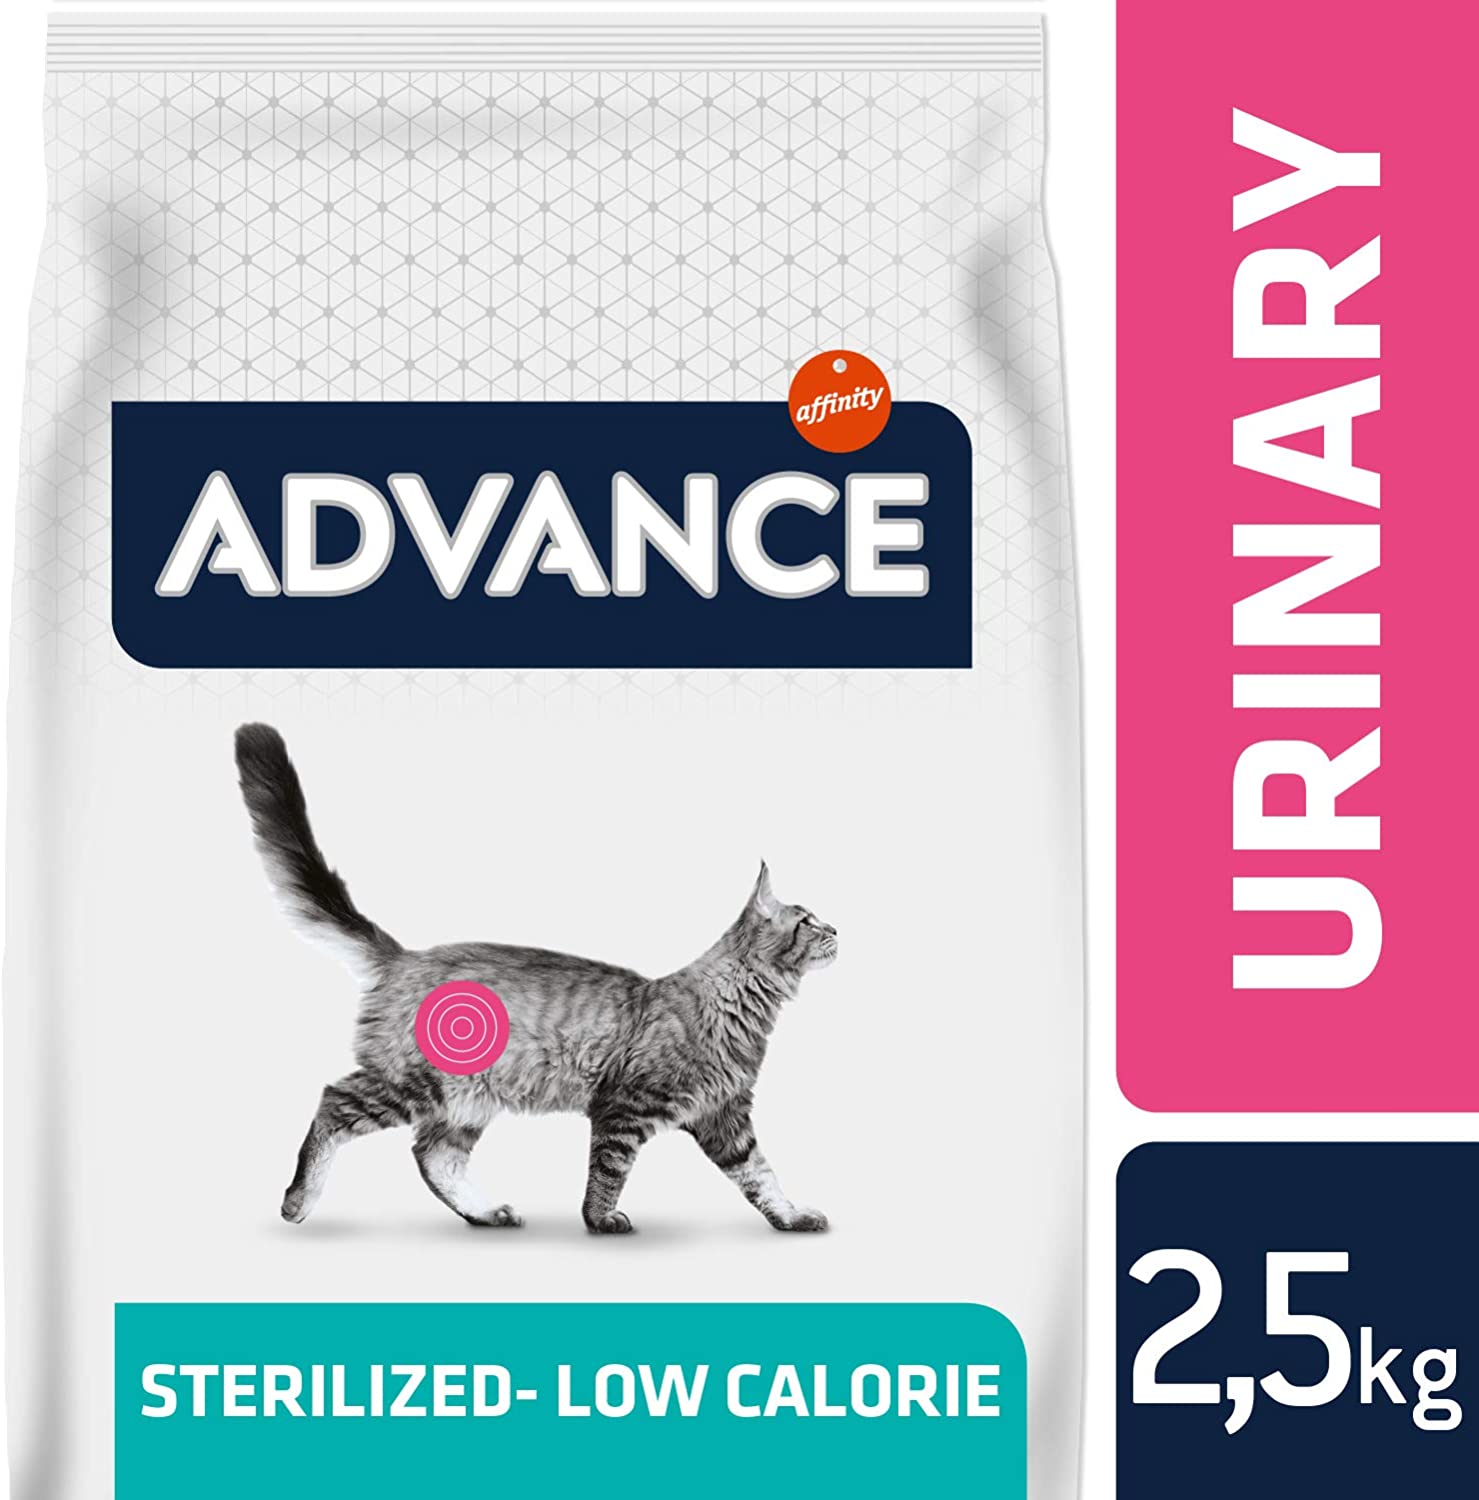  Advance Veterinary Diets Urinary Low Calorie - Pienso para Gatos, 2.5 kg 